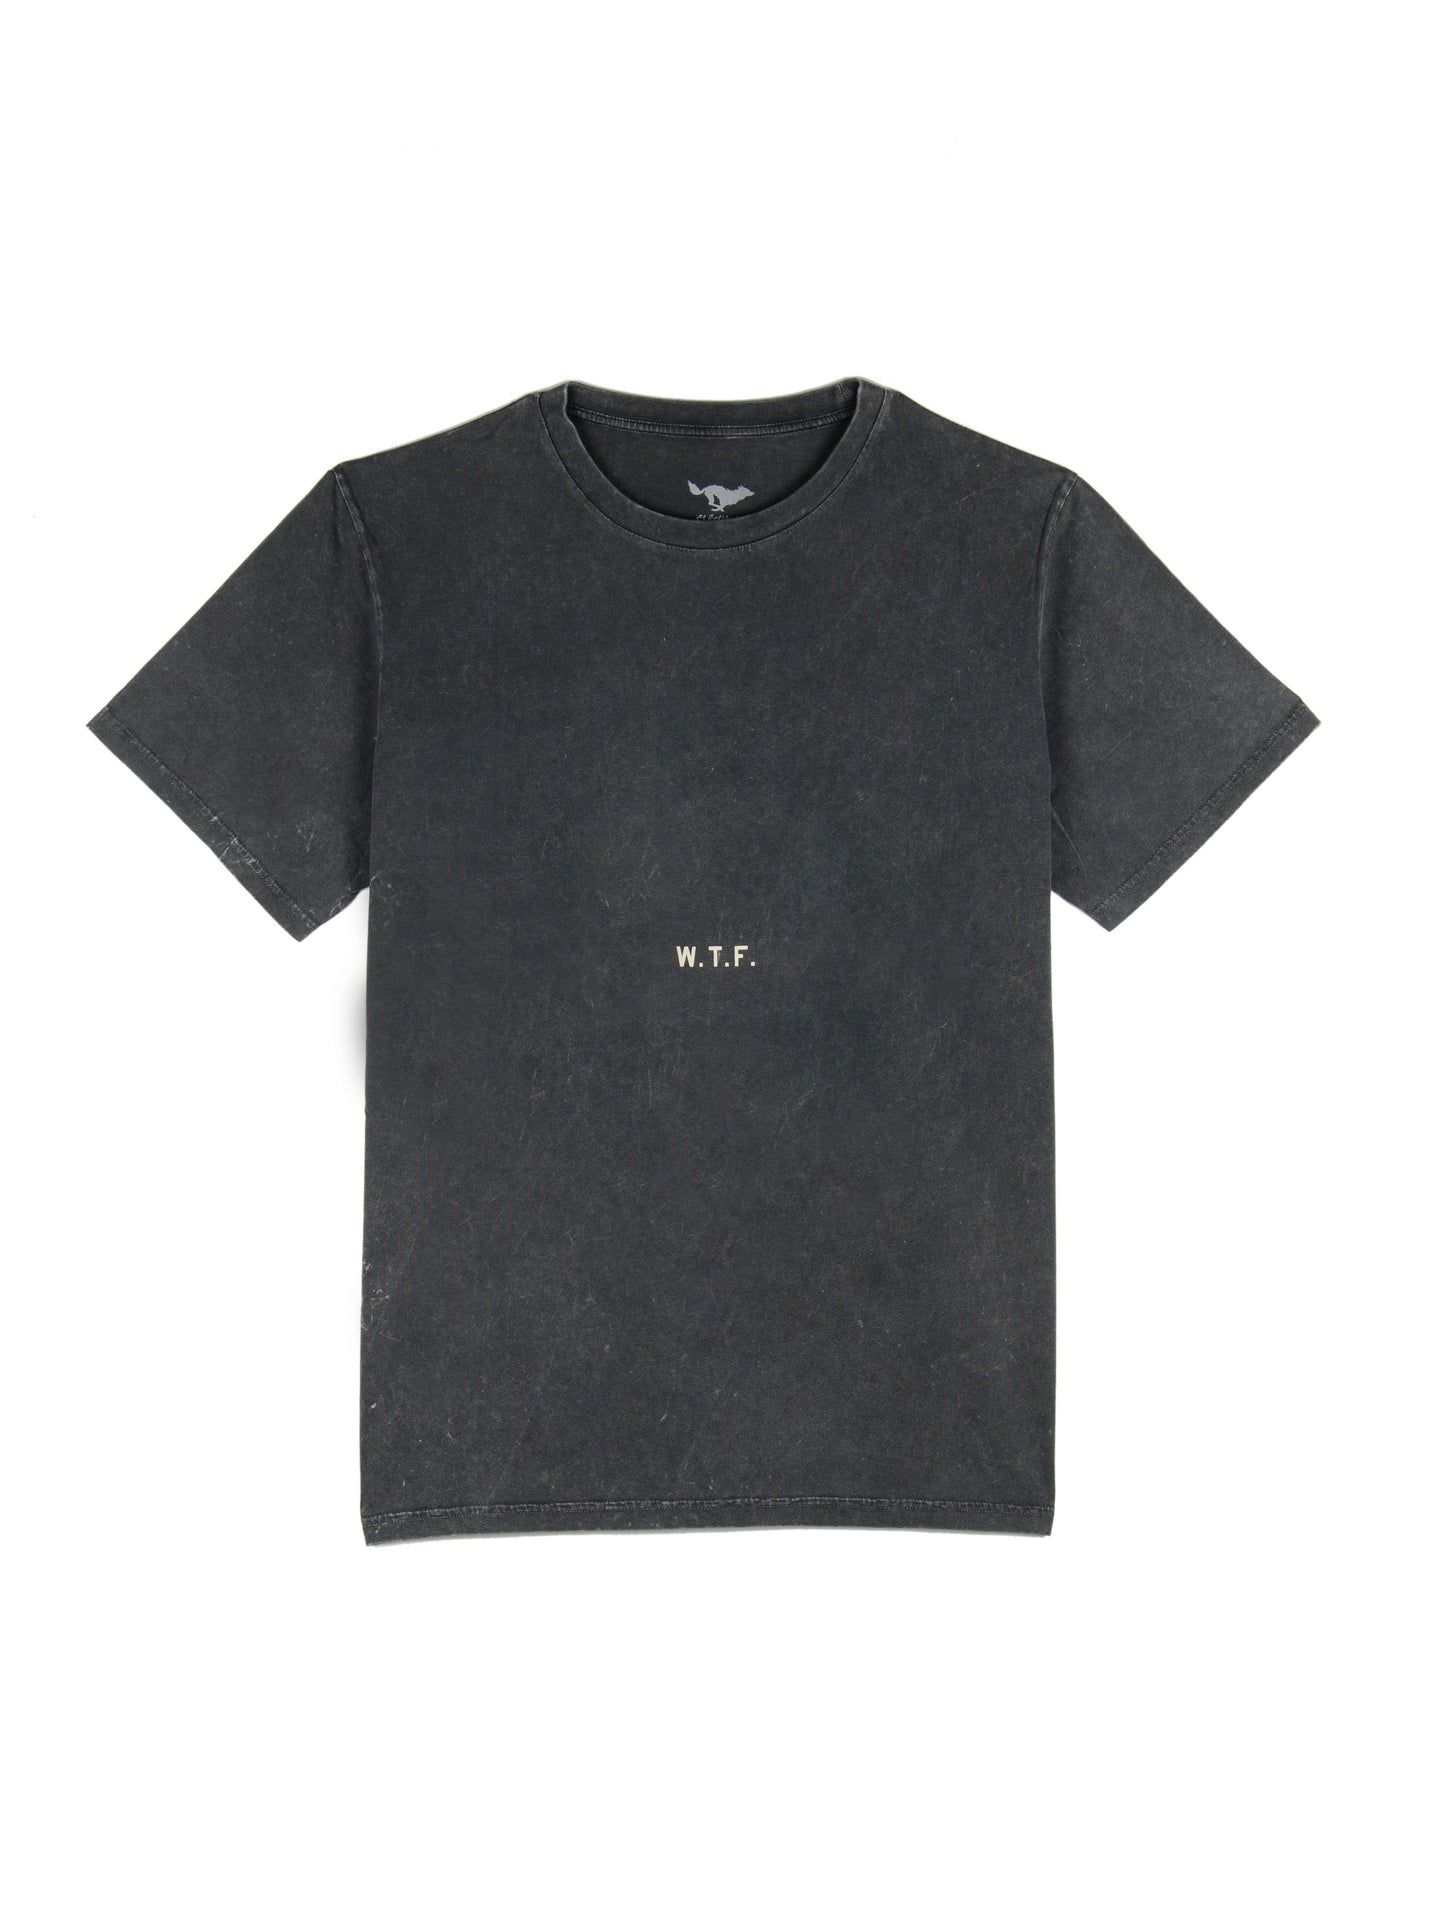 K.I.S.S. T-Shirt Faded Black/Ecru